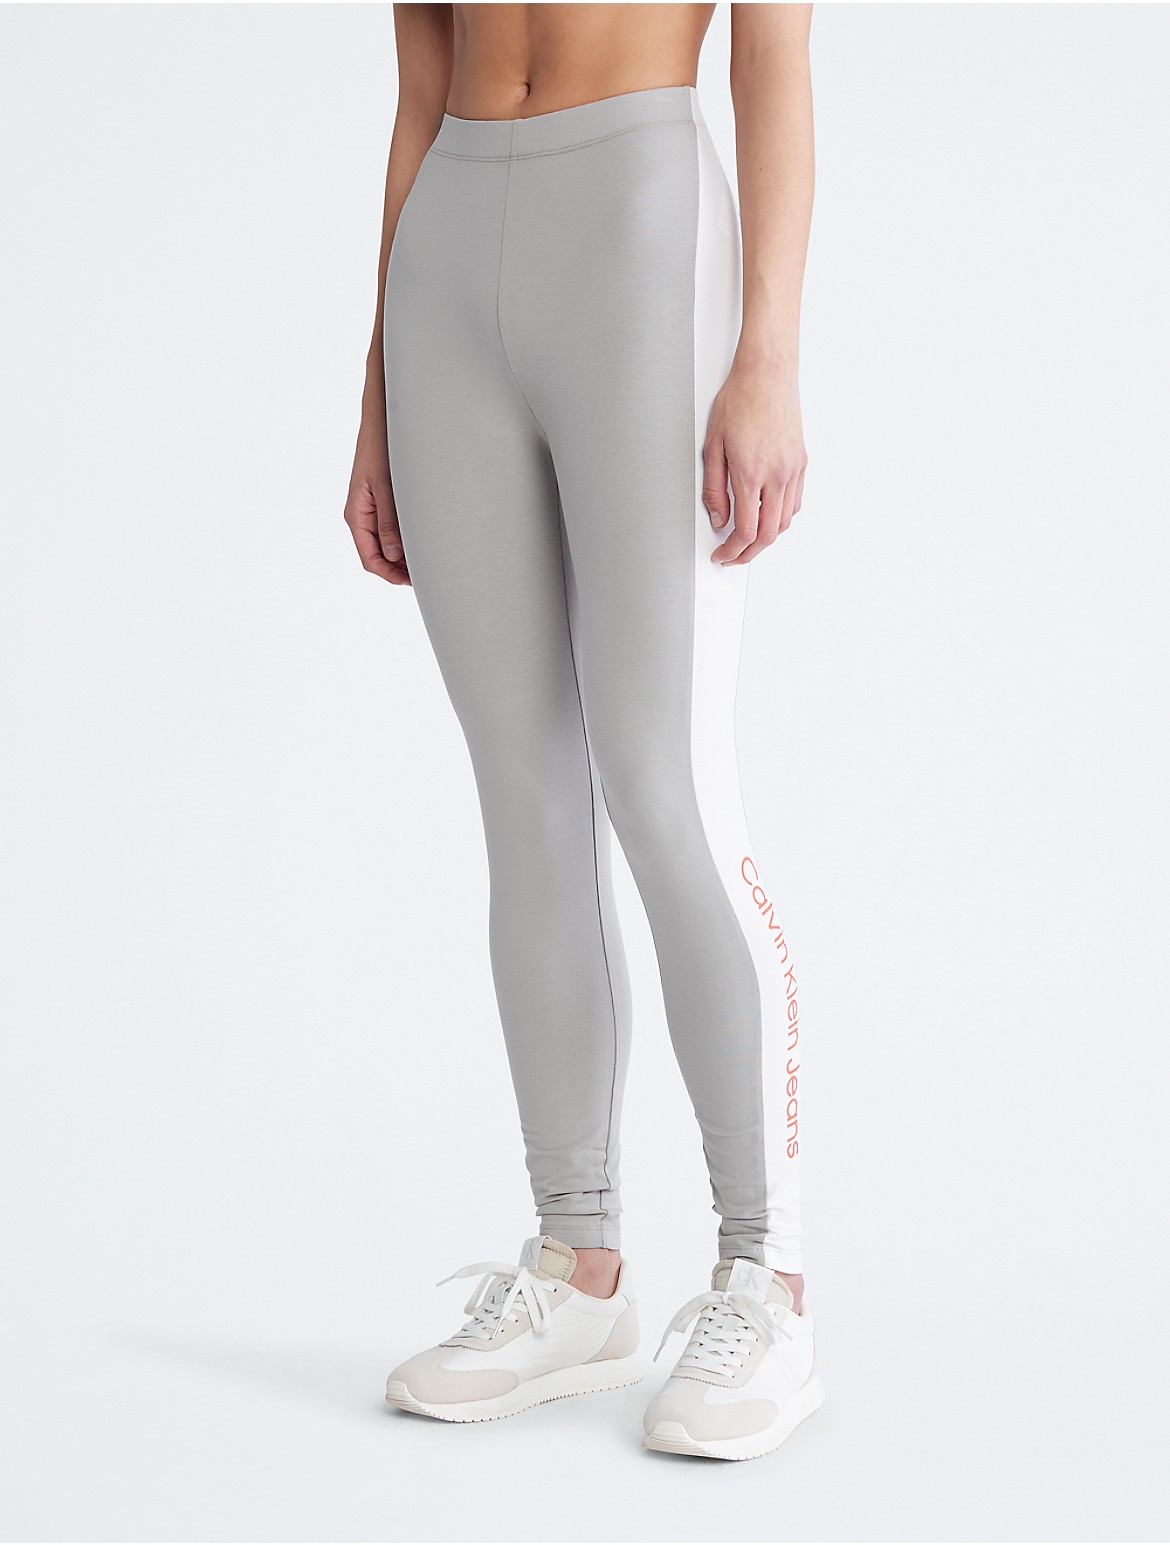 Calvin Klein Women's Colorblock Slim Fit Leggings - White - XS